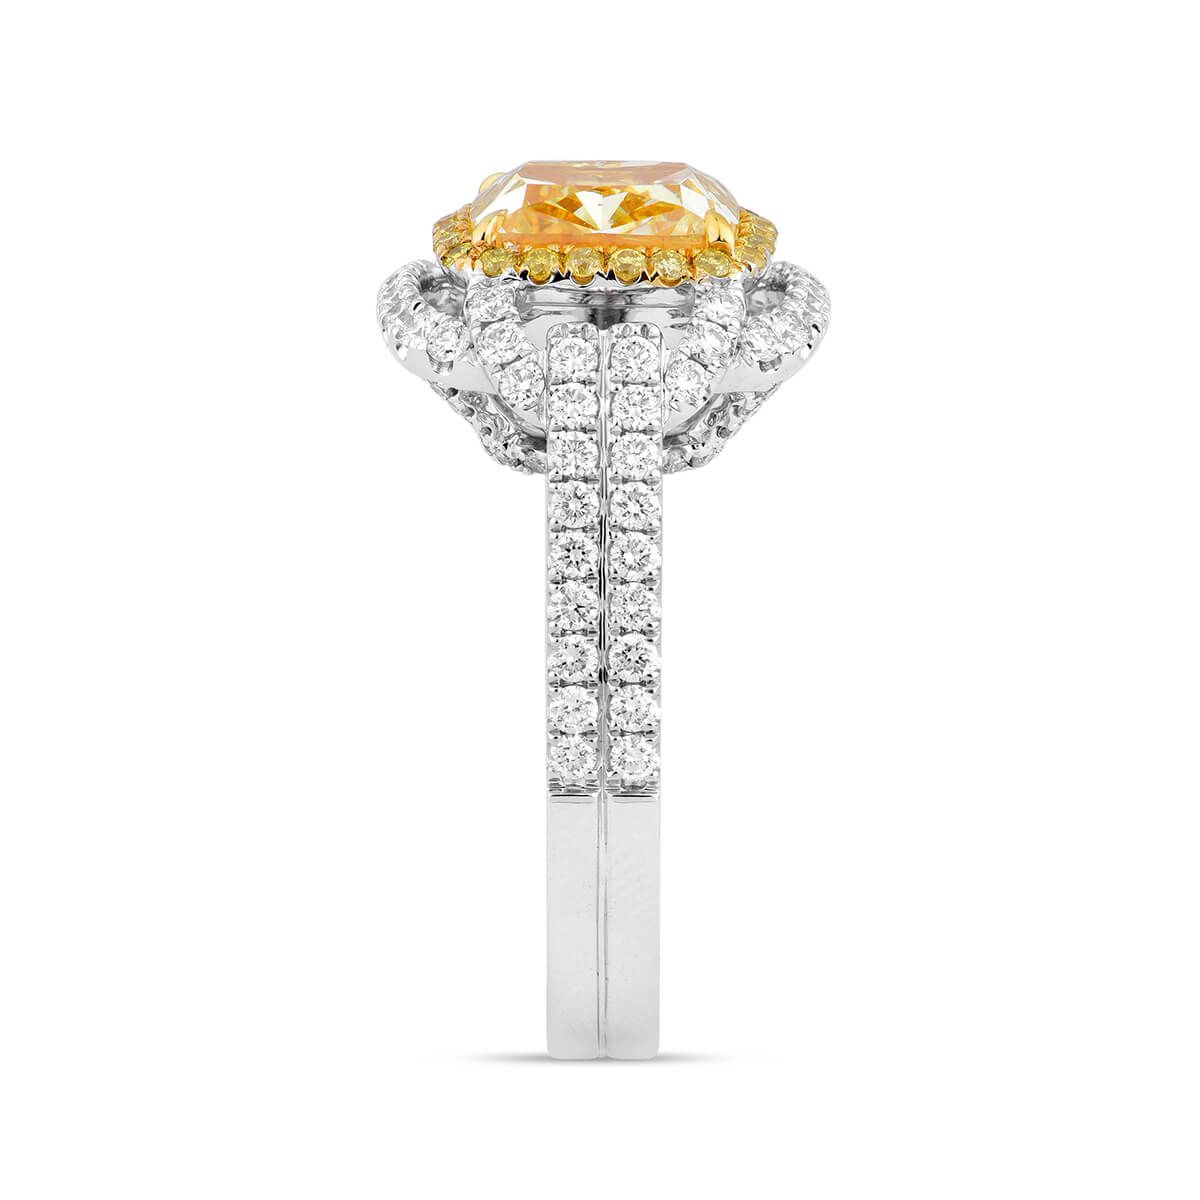 Fancy Light Yellow Diamond Ring, 2.72 Ct. (3.70 Ct. TW), Cushion shape, GIA Certified, 1192037814